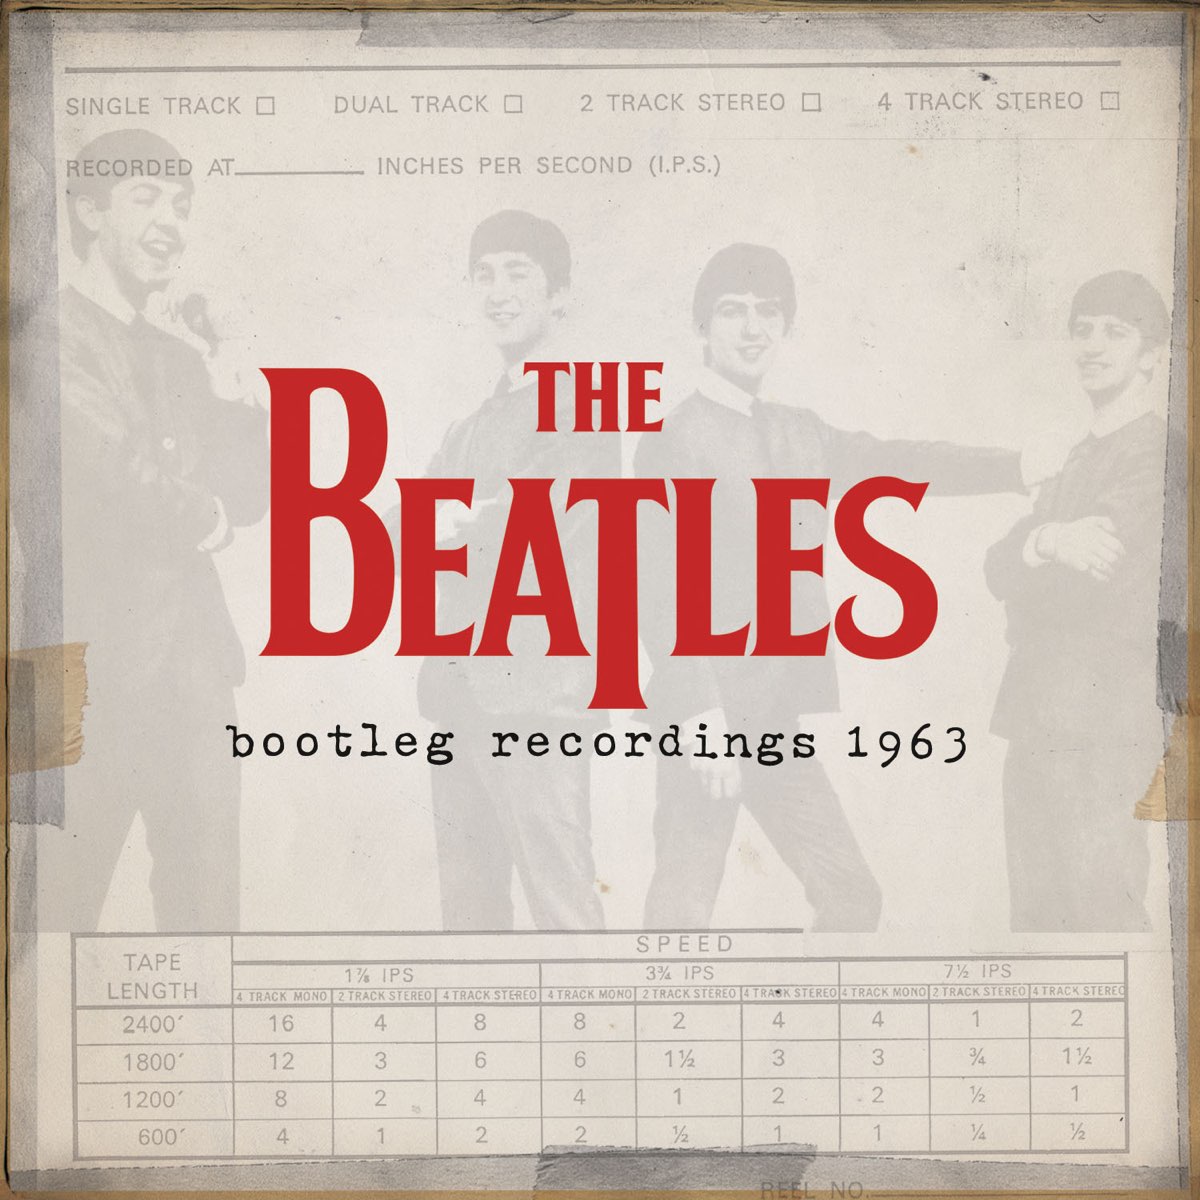 ‎The Beatles Bootleg Recordings 1963 - Album by The Beatles - Apple Music